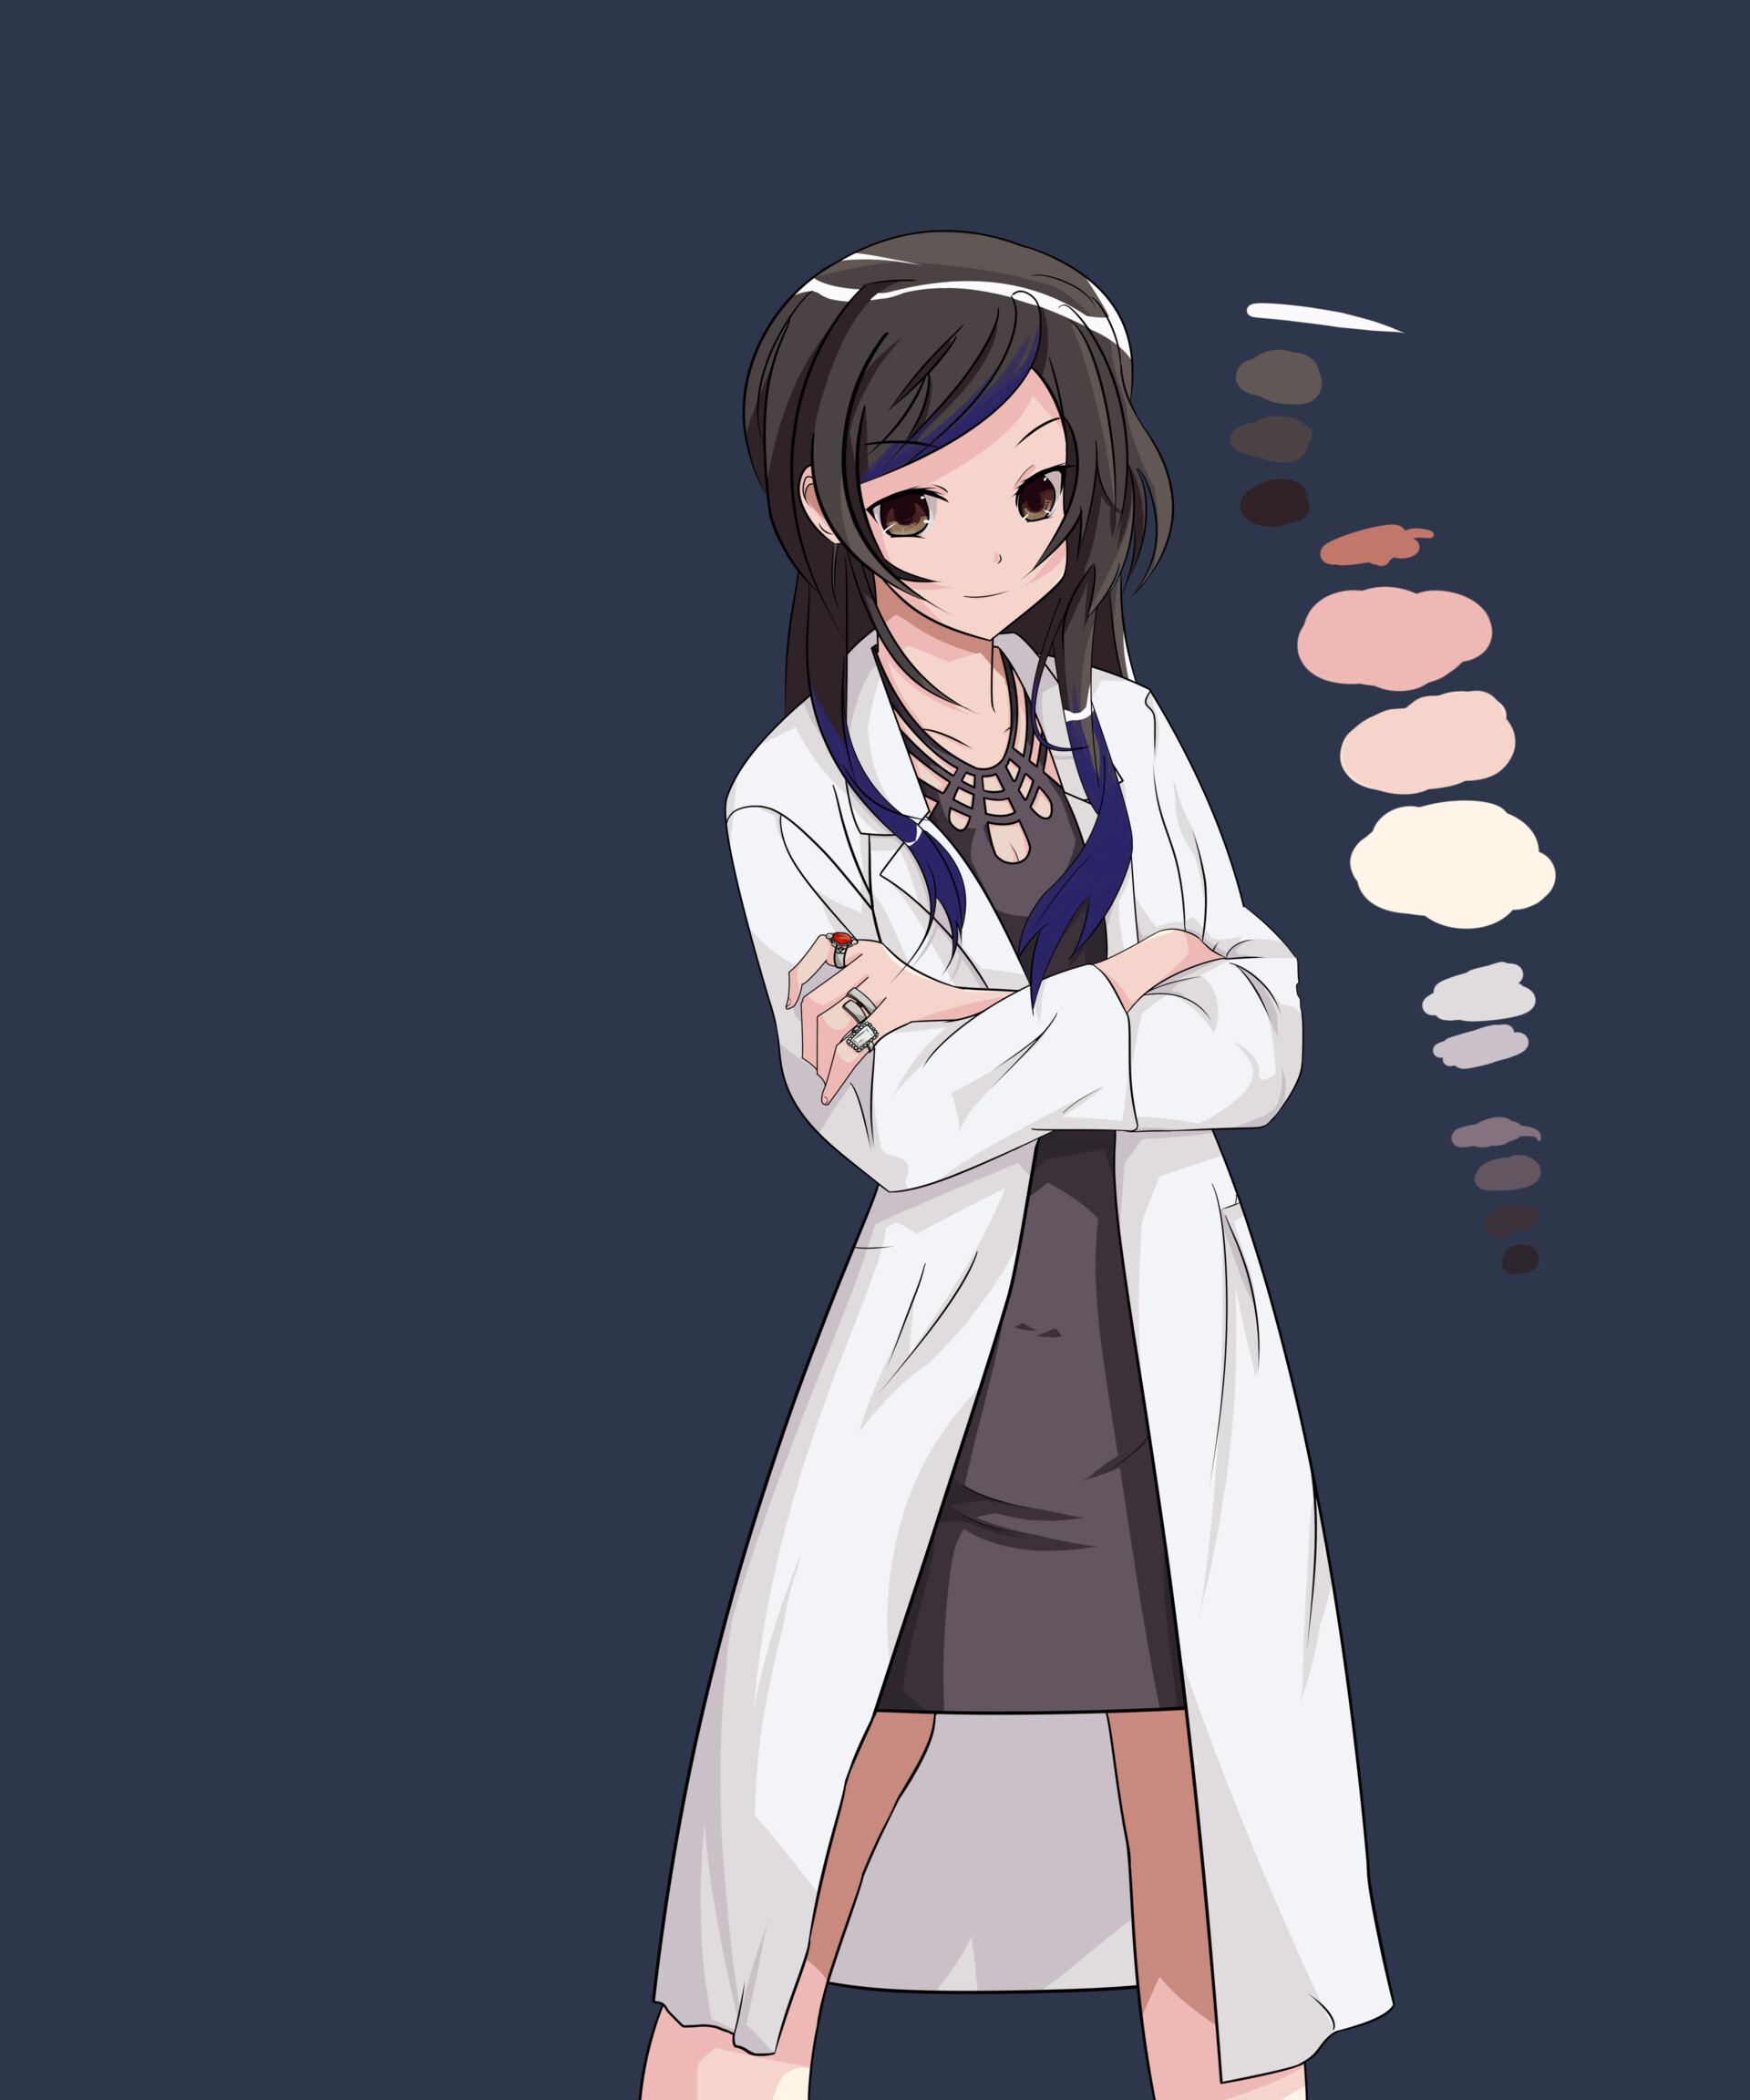 Premium AI Image  Anime girl in a white lab coat